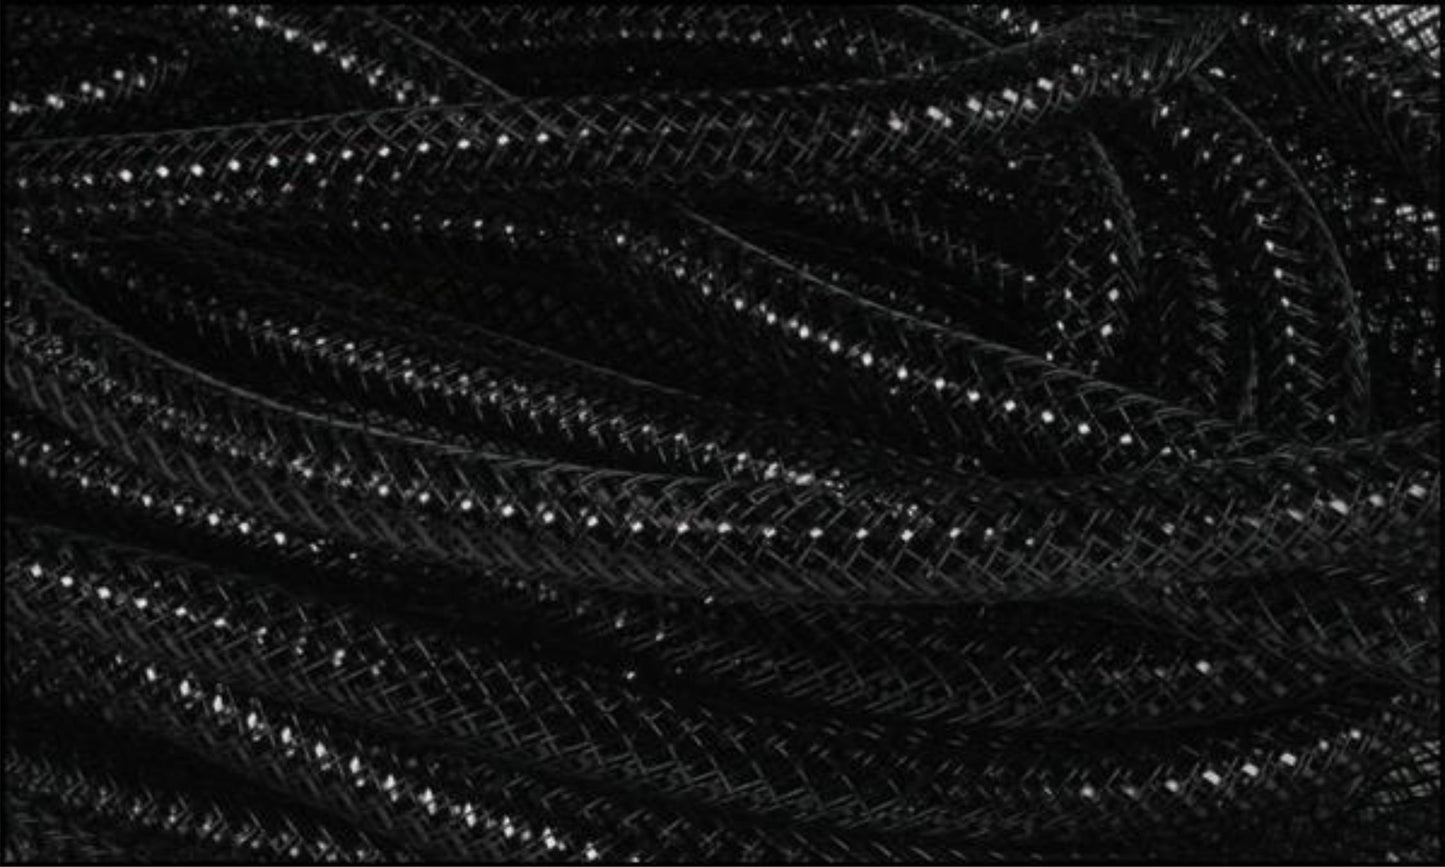 Deco Flex Tubing * Black with Black Foil * 8mm x 30 yards * Wreath Supplies * RE3004E5